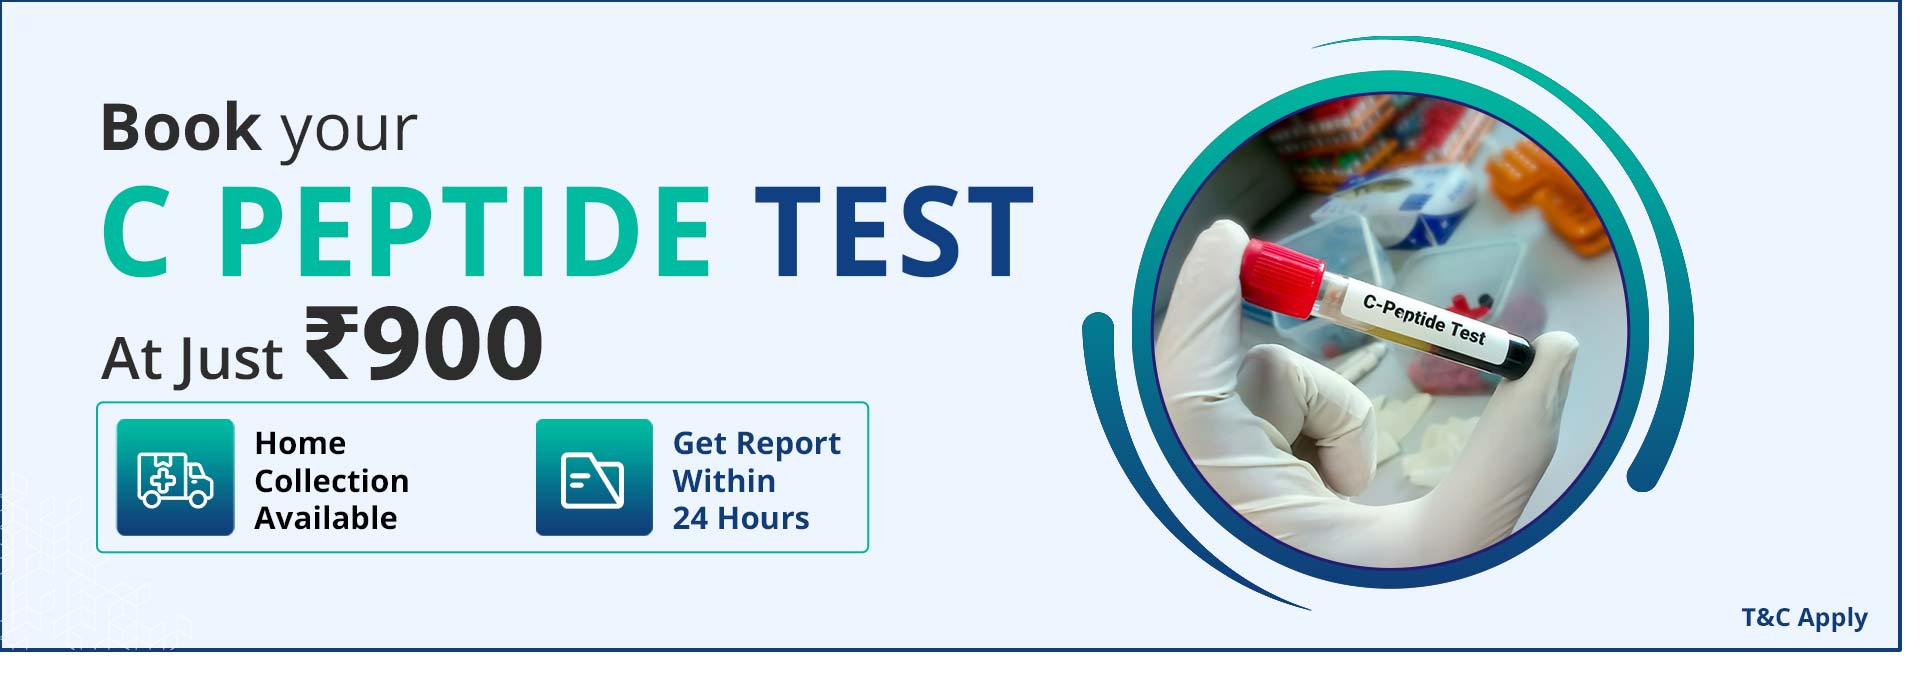 C Peptide Test